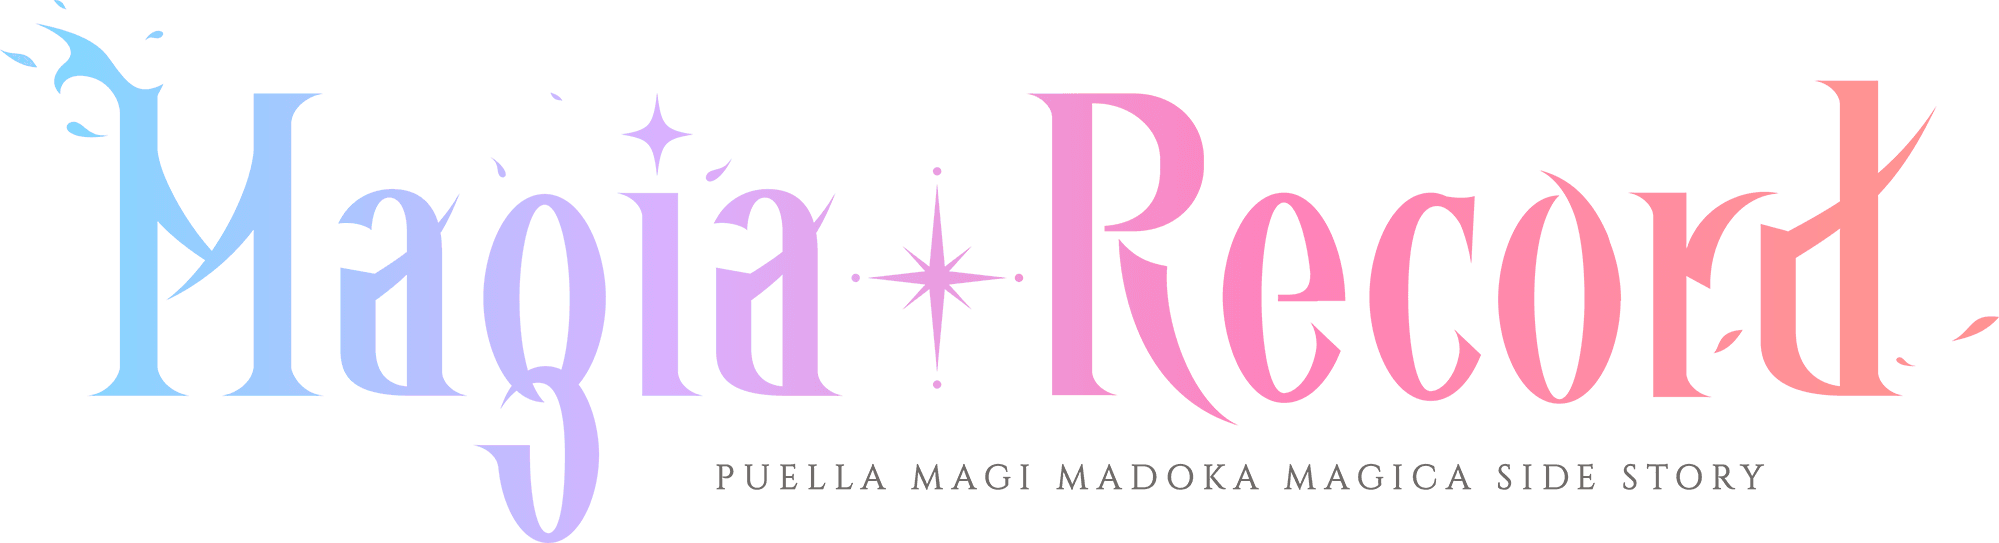 Magia Record: Puella Magi Madoka Magica Side Story logo